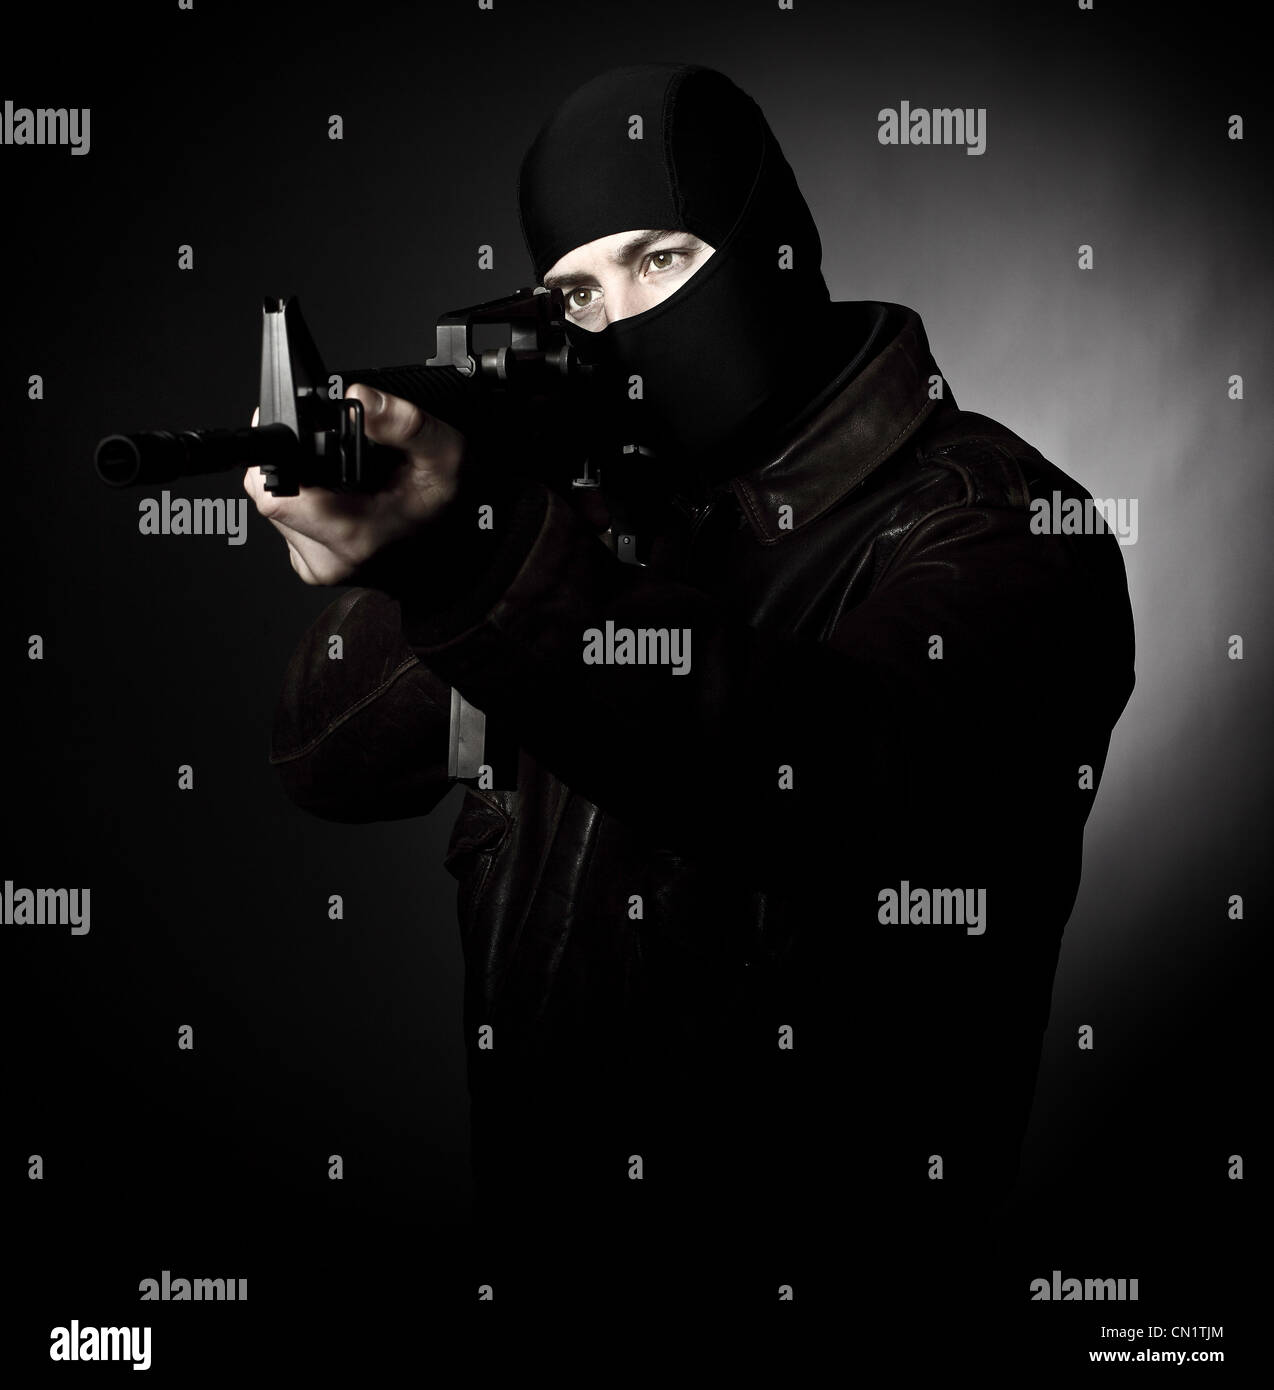 terrorist portrait with m4 weapon Stock Photo